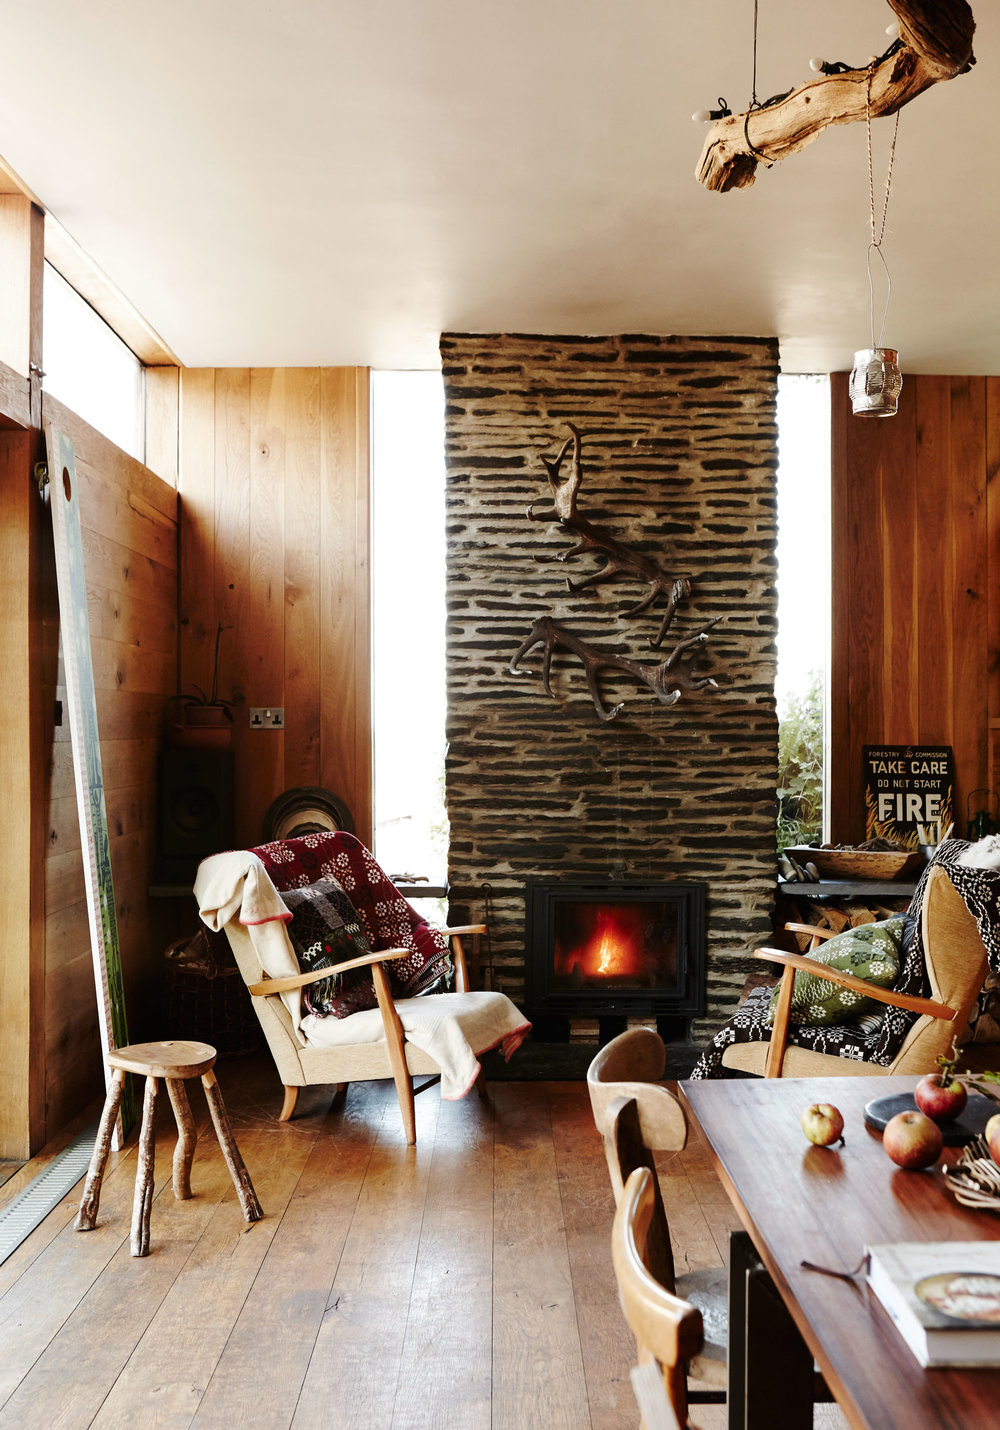 stone_fireplace_cosy_interior.jpg